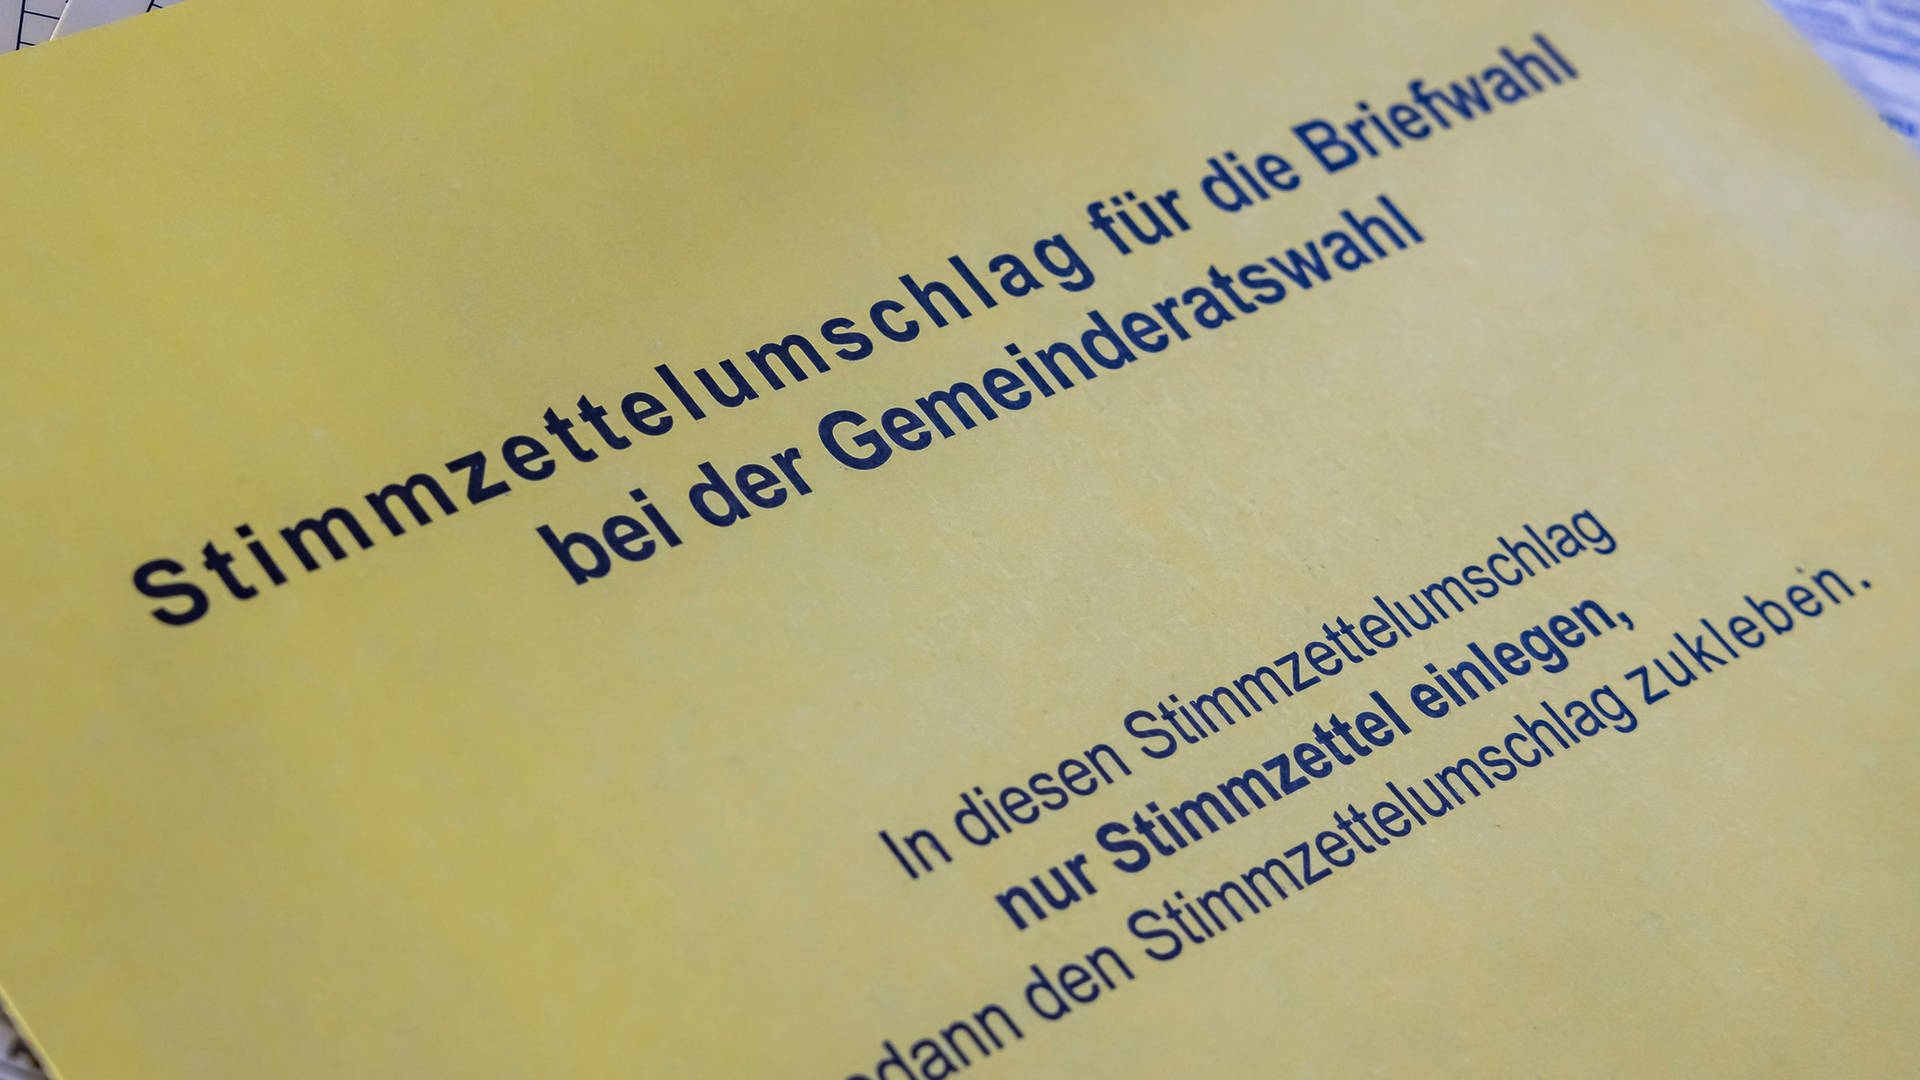 Regierungspräsidium Karlsruhe: Kommunalwahl Rastatt teilweise ungültig